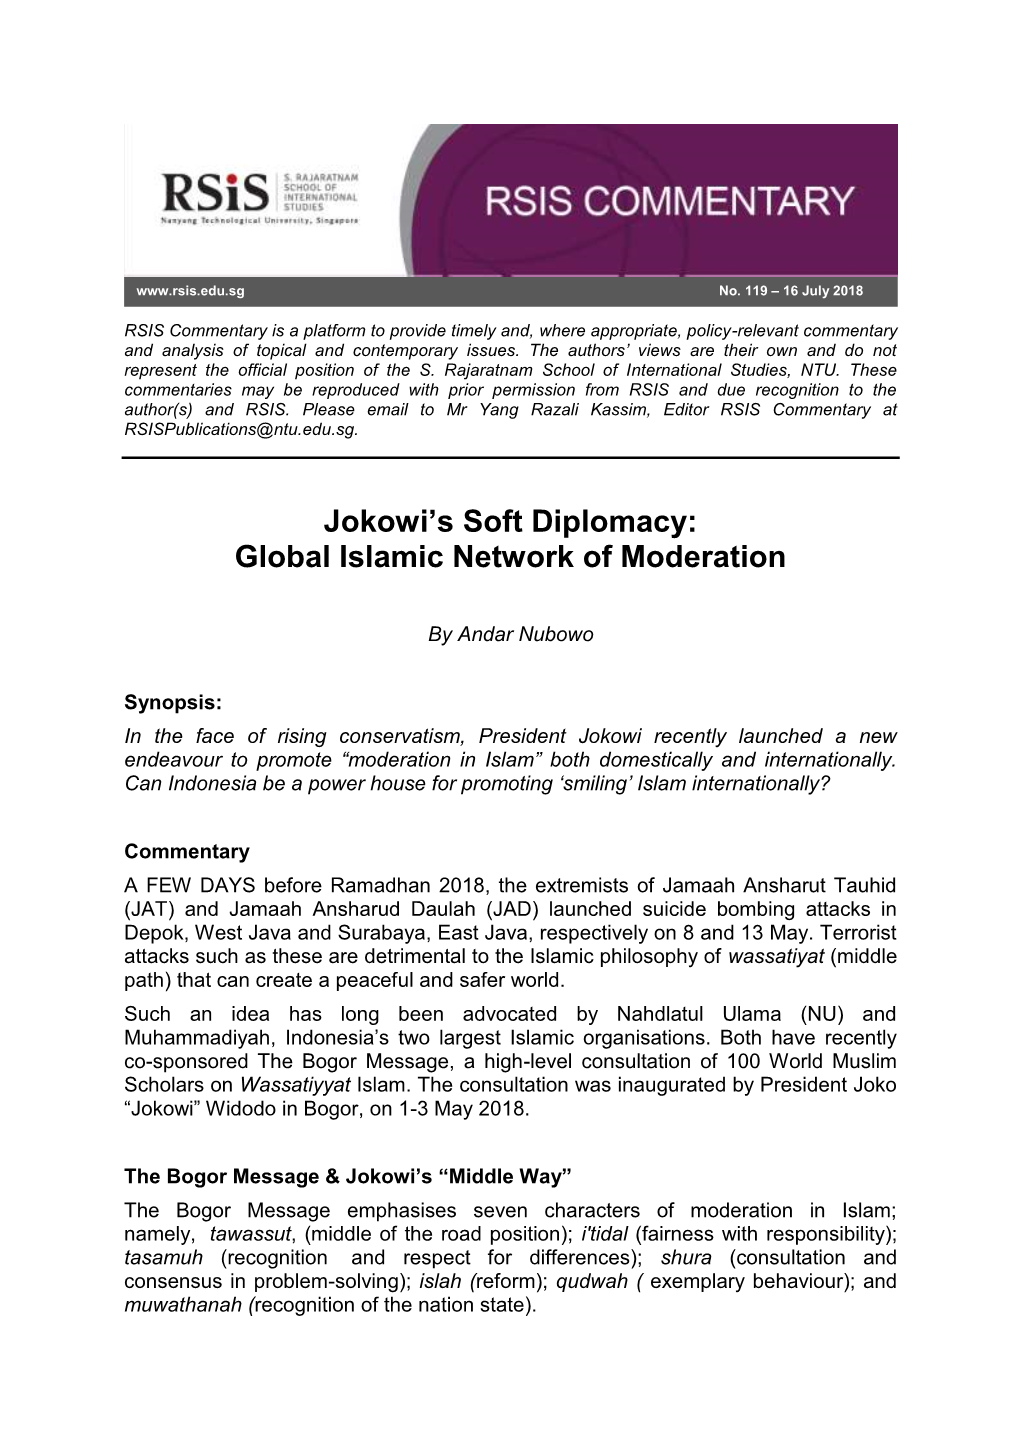 Jokowi's Soft Diplomacy: Global Islamic Network of Moderation